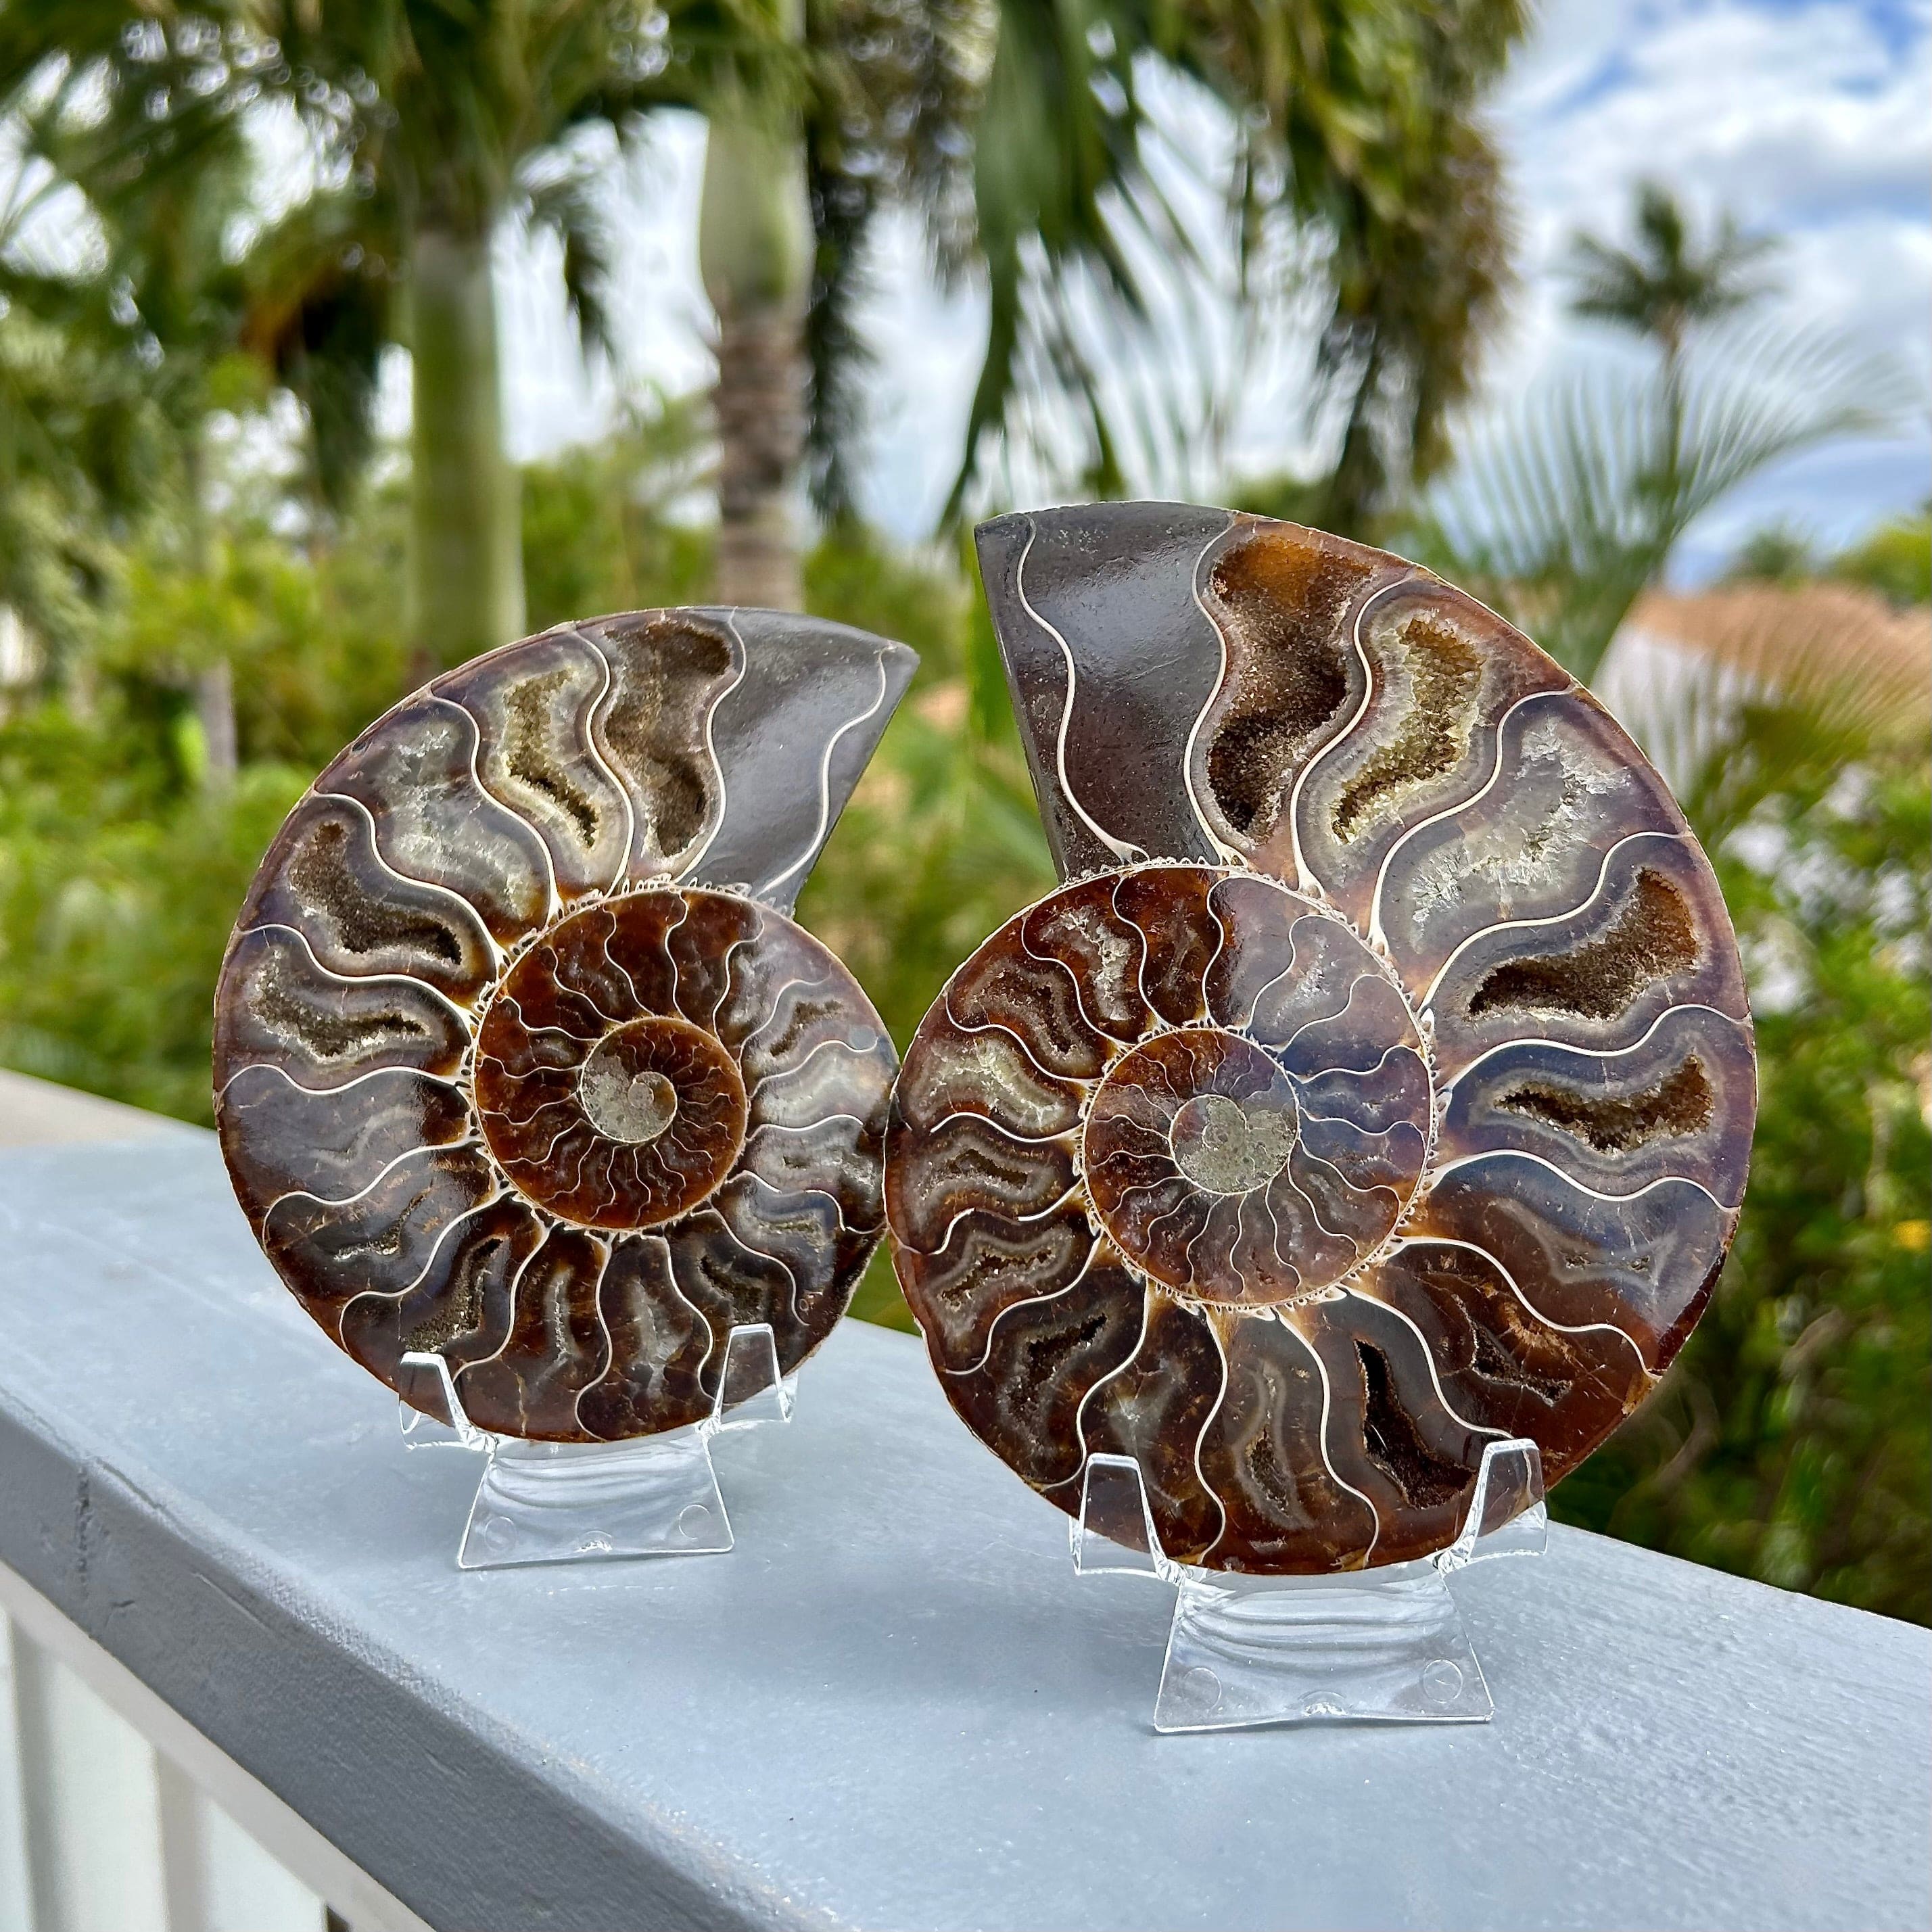 Split Ammonite Fossil Shell Pearl Pendant Copper Wire Wrap Artisan